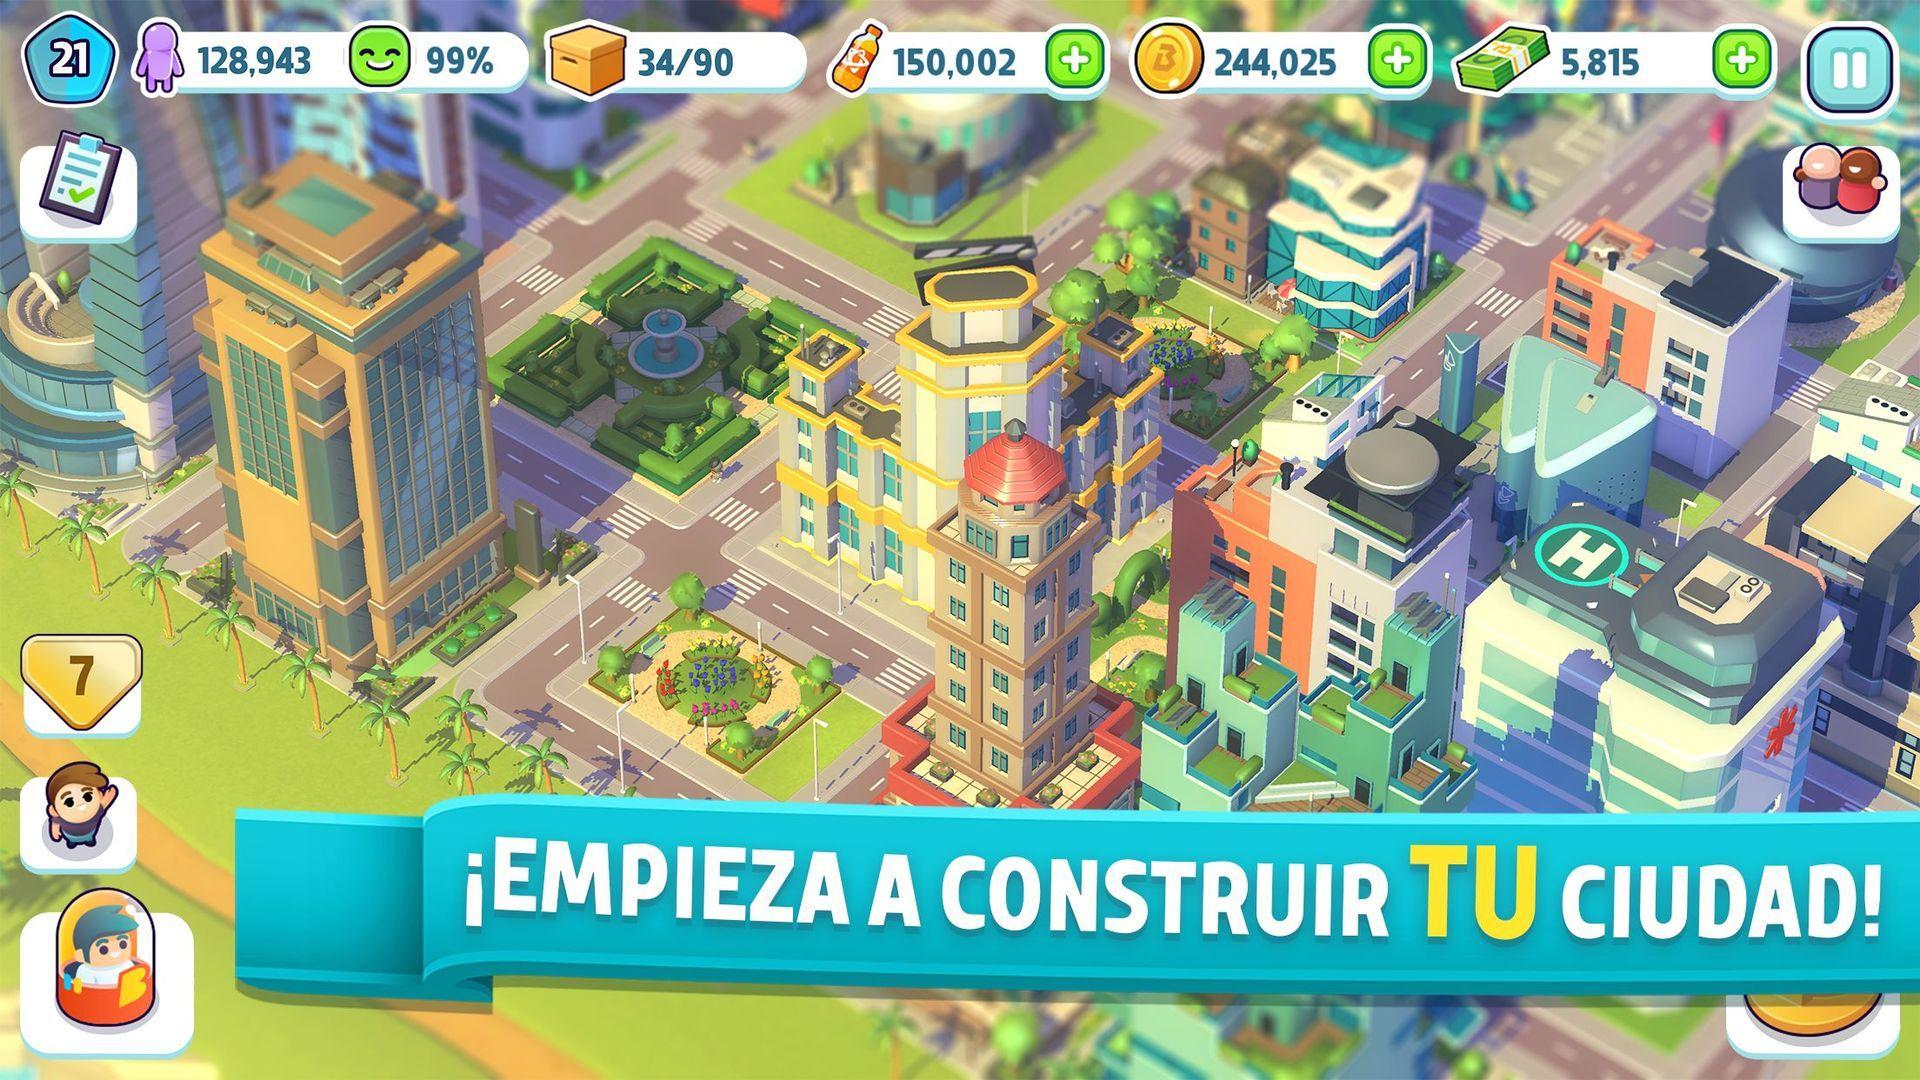 Screenshot 1 of City Mania: Town Building Game 